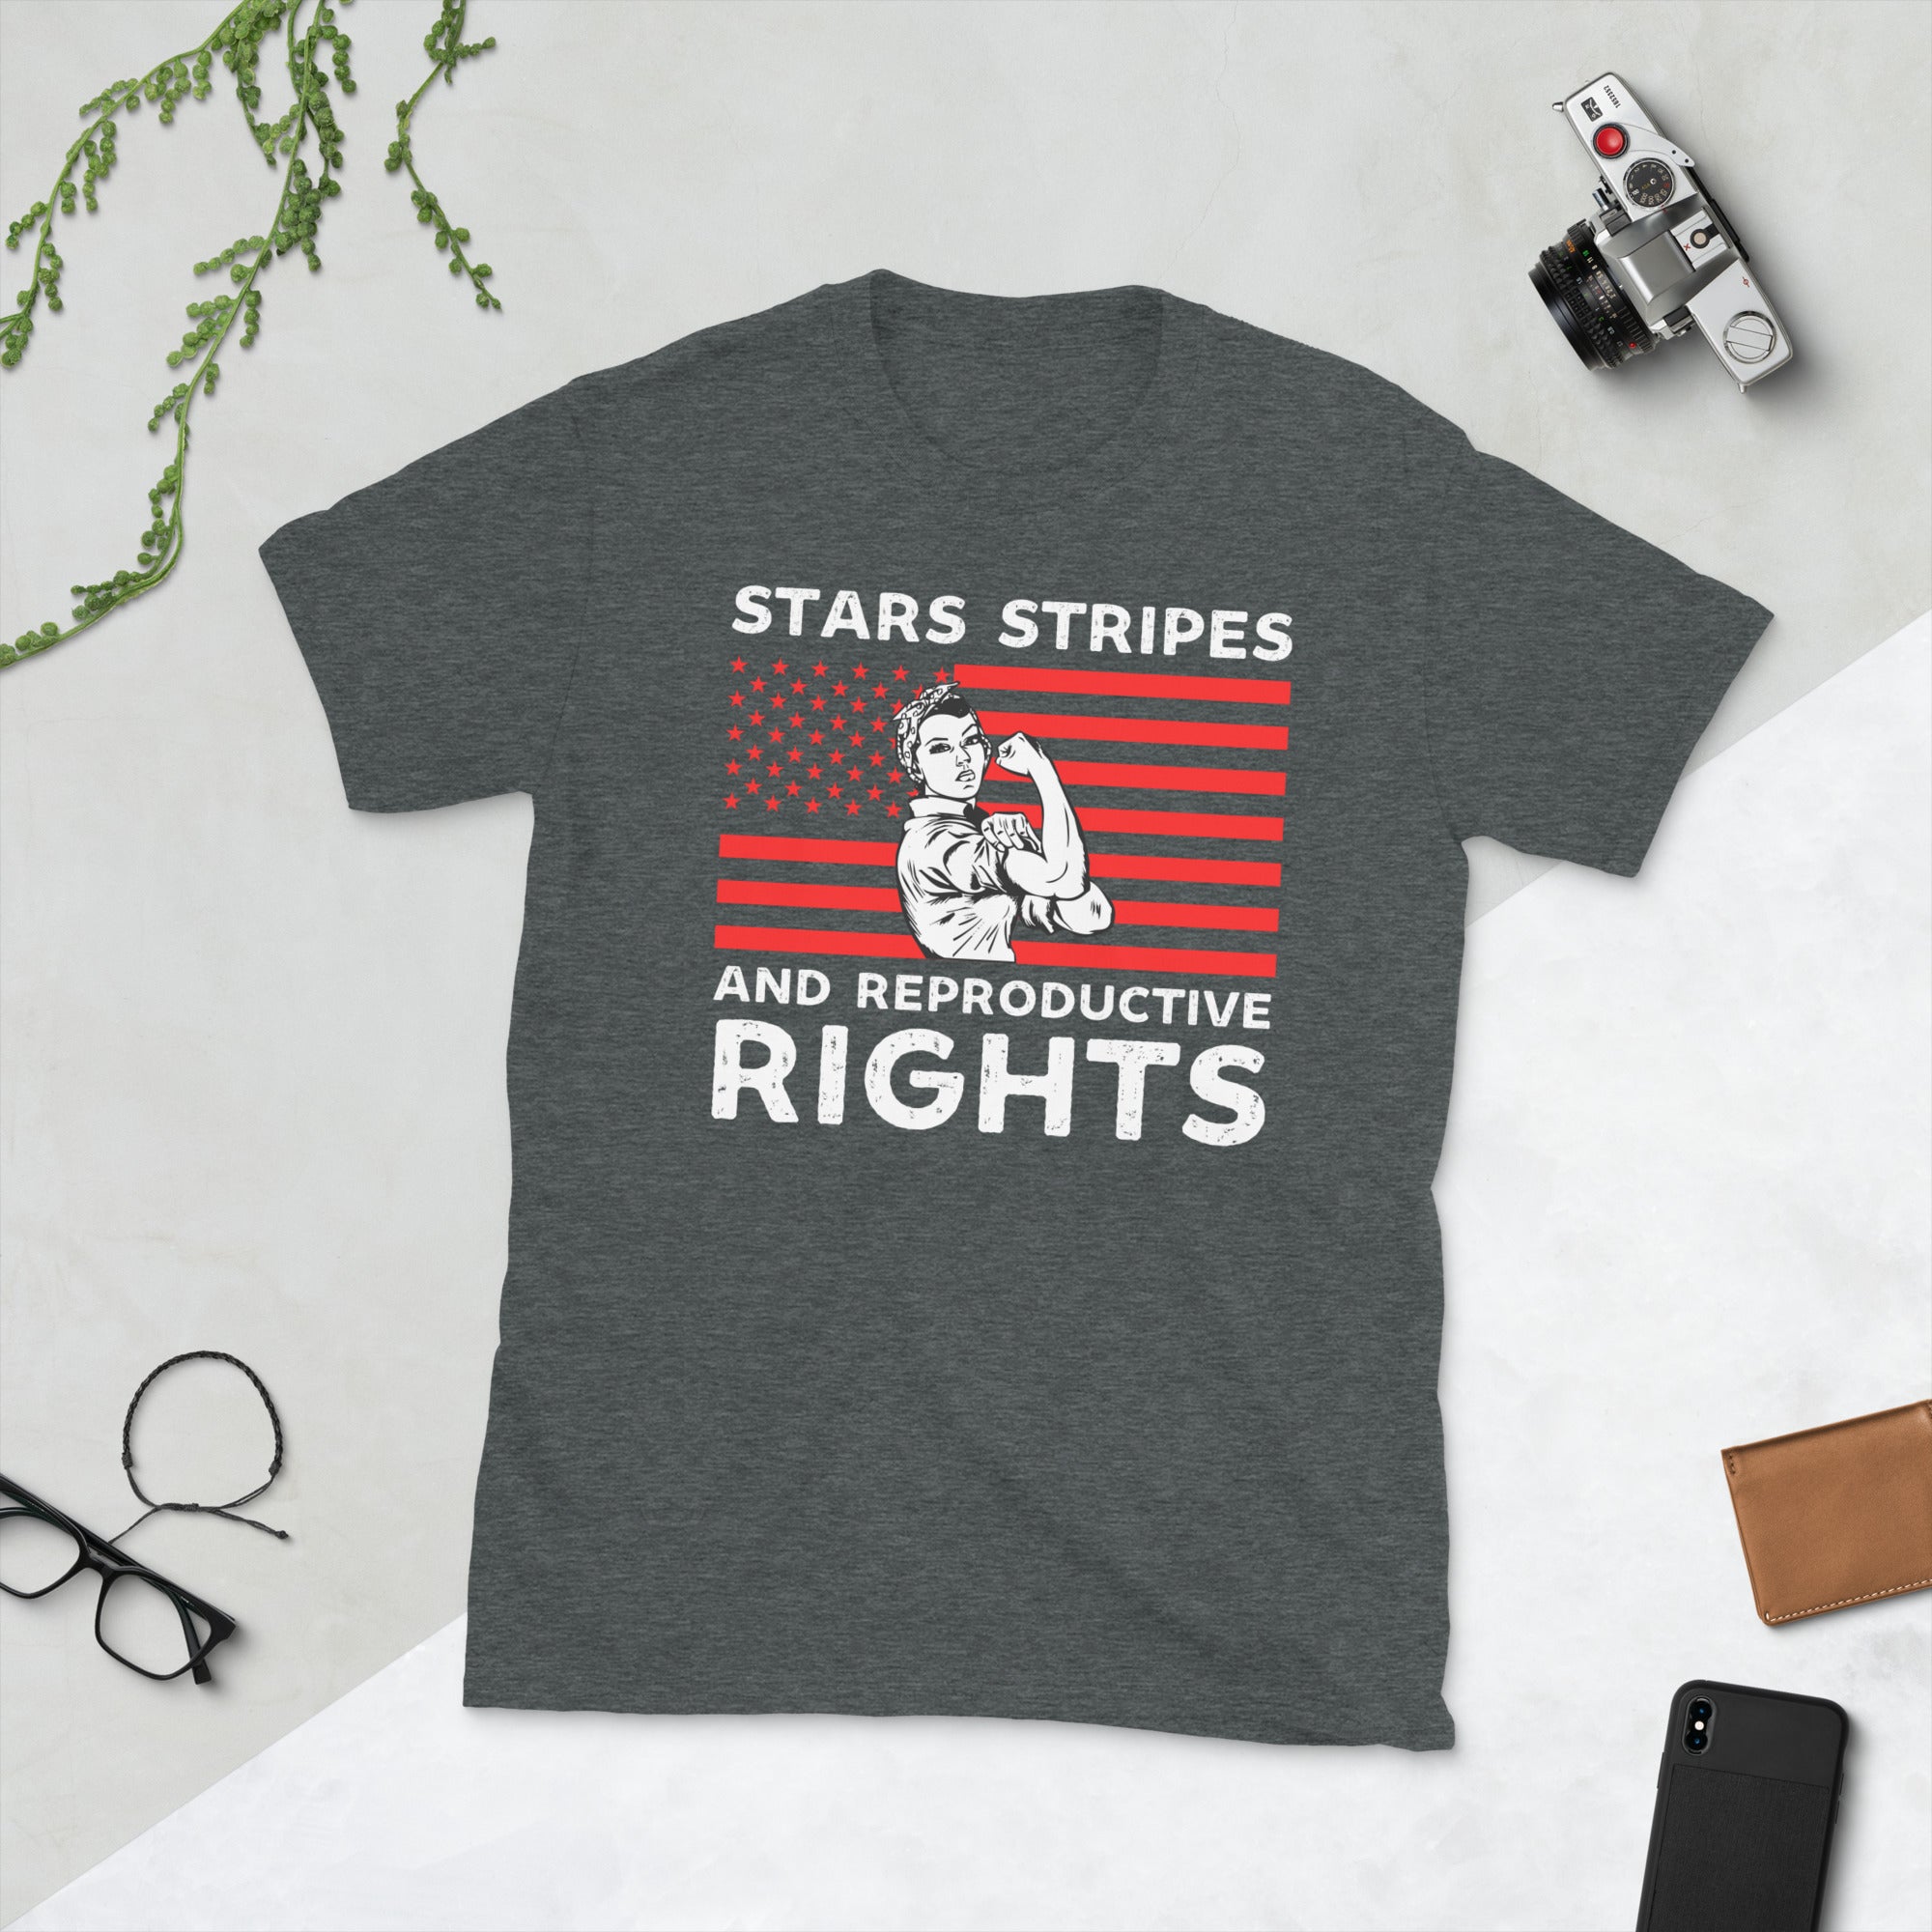 Sterne Streifen und reproduktive Rechte Shirt, 4. Juli Shirt, Progressive TShirt, Gleiche Rechte, Frauen Gleichberechtigung T-Shirt, Pro Roe Geschenk T-Shirt